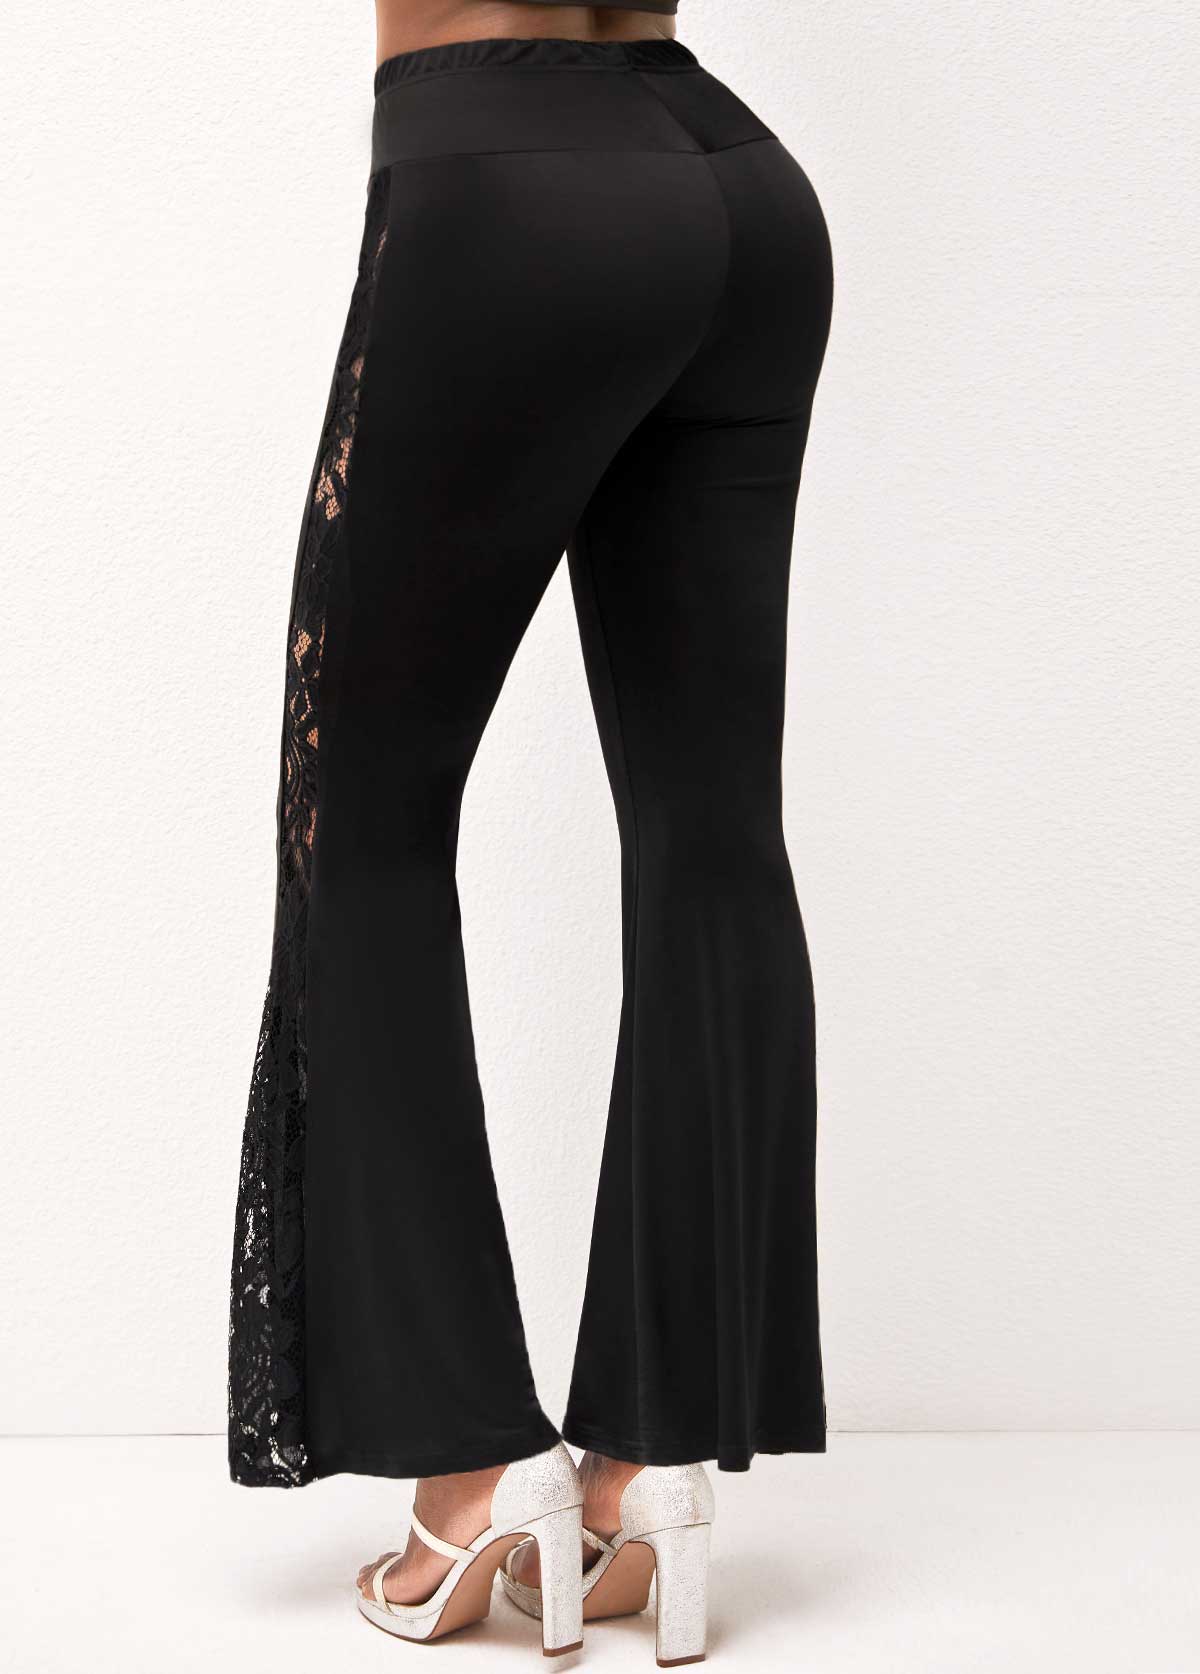 Lace Stitching High Waisted Black Flare Pants